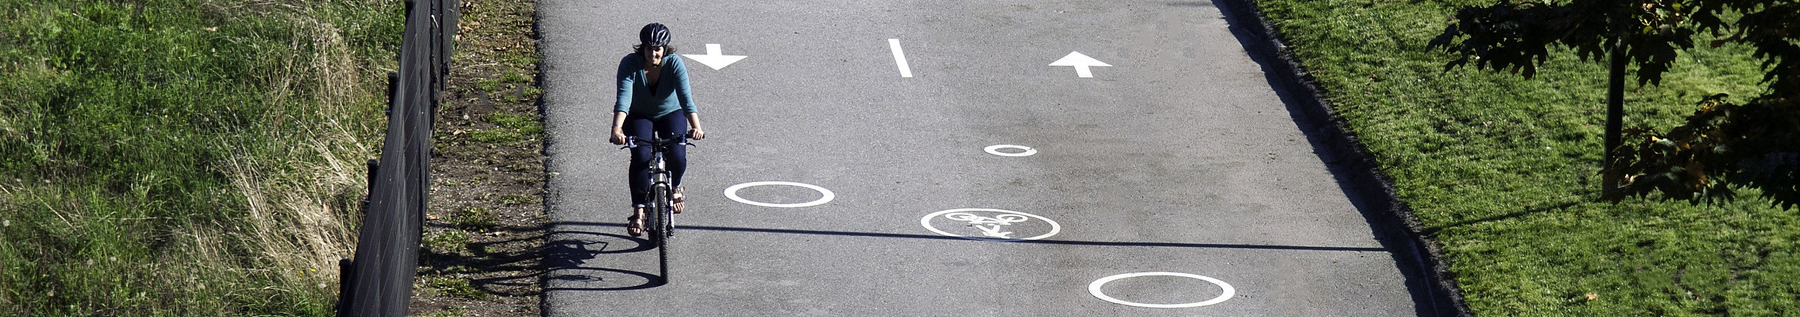 cyclist on greenway